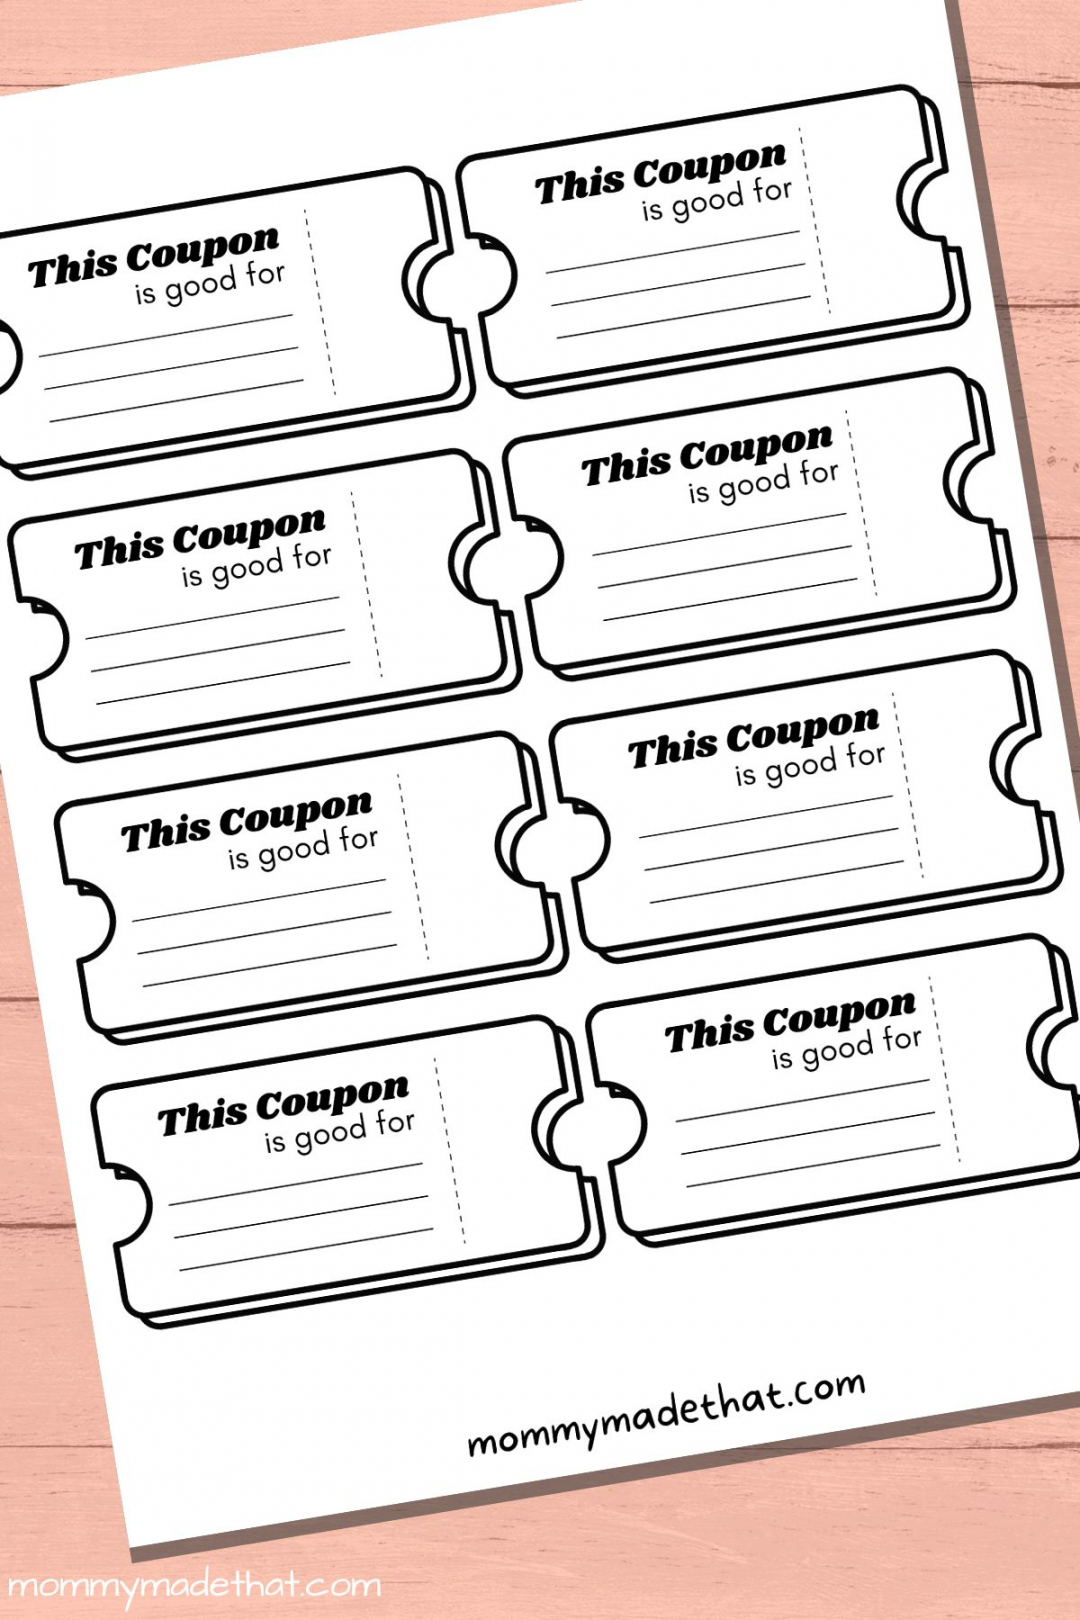 Printable Coupons For Free - Printable - Lots of Blank Coupon Templates (Free Printables!)